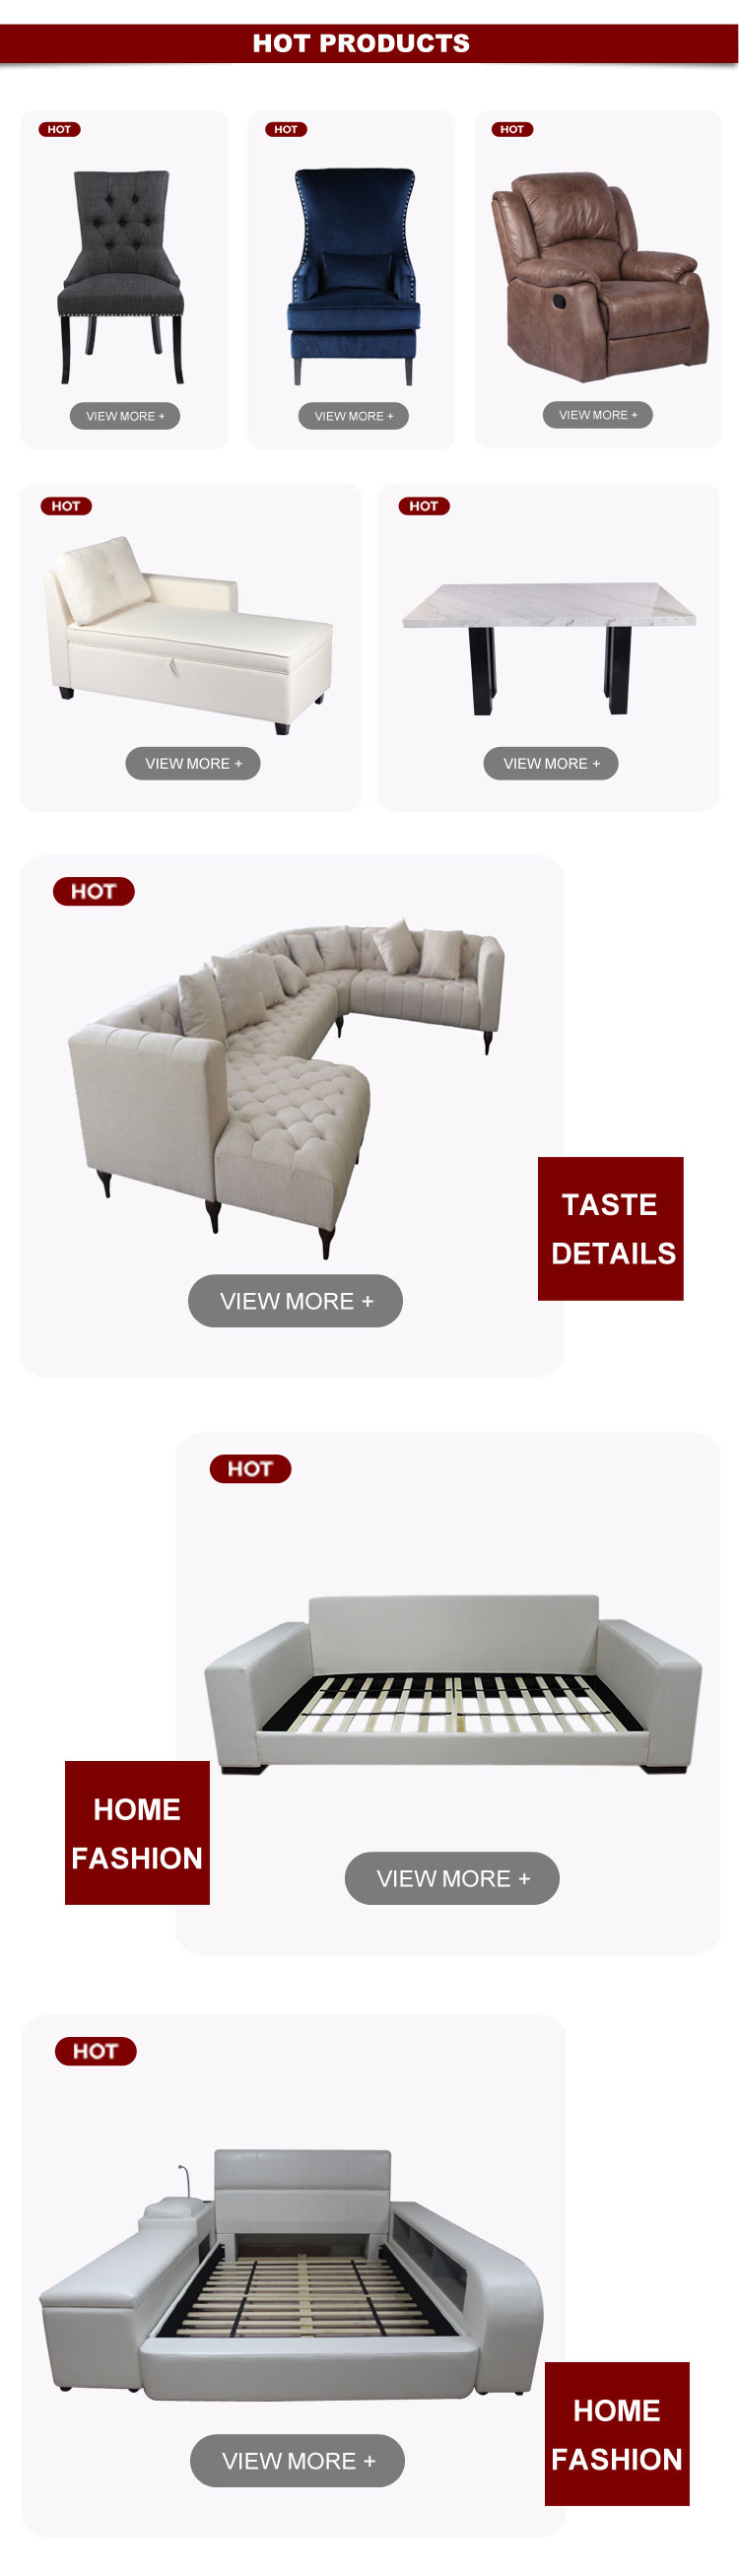 Kingbird Furniture Company Brand Bedroom Furniture Custom Microfiber Couch Ashley Furniture 18